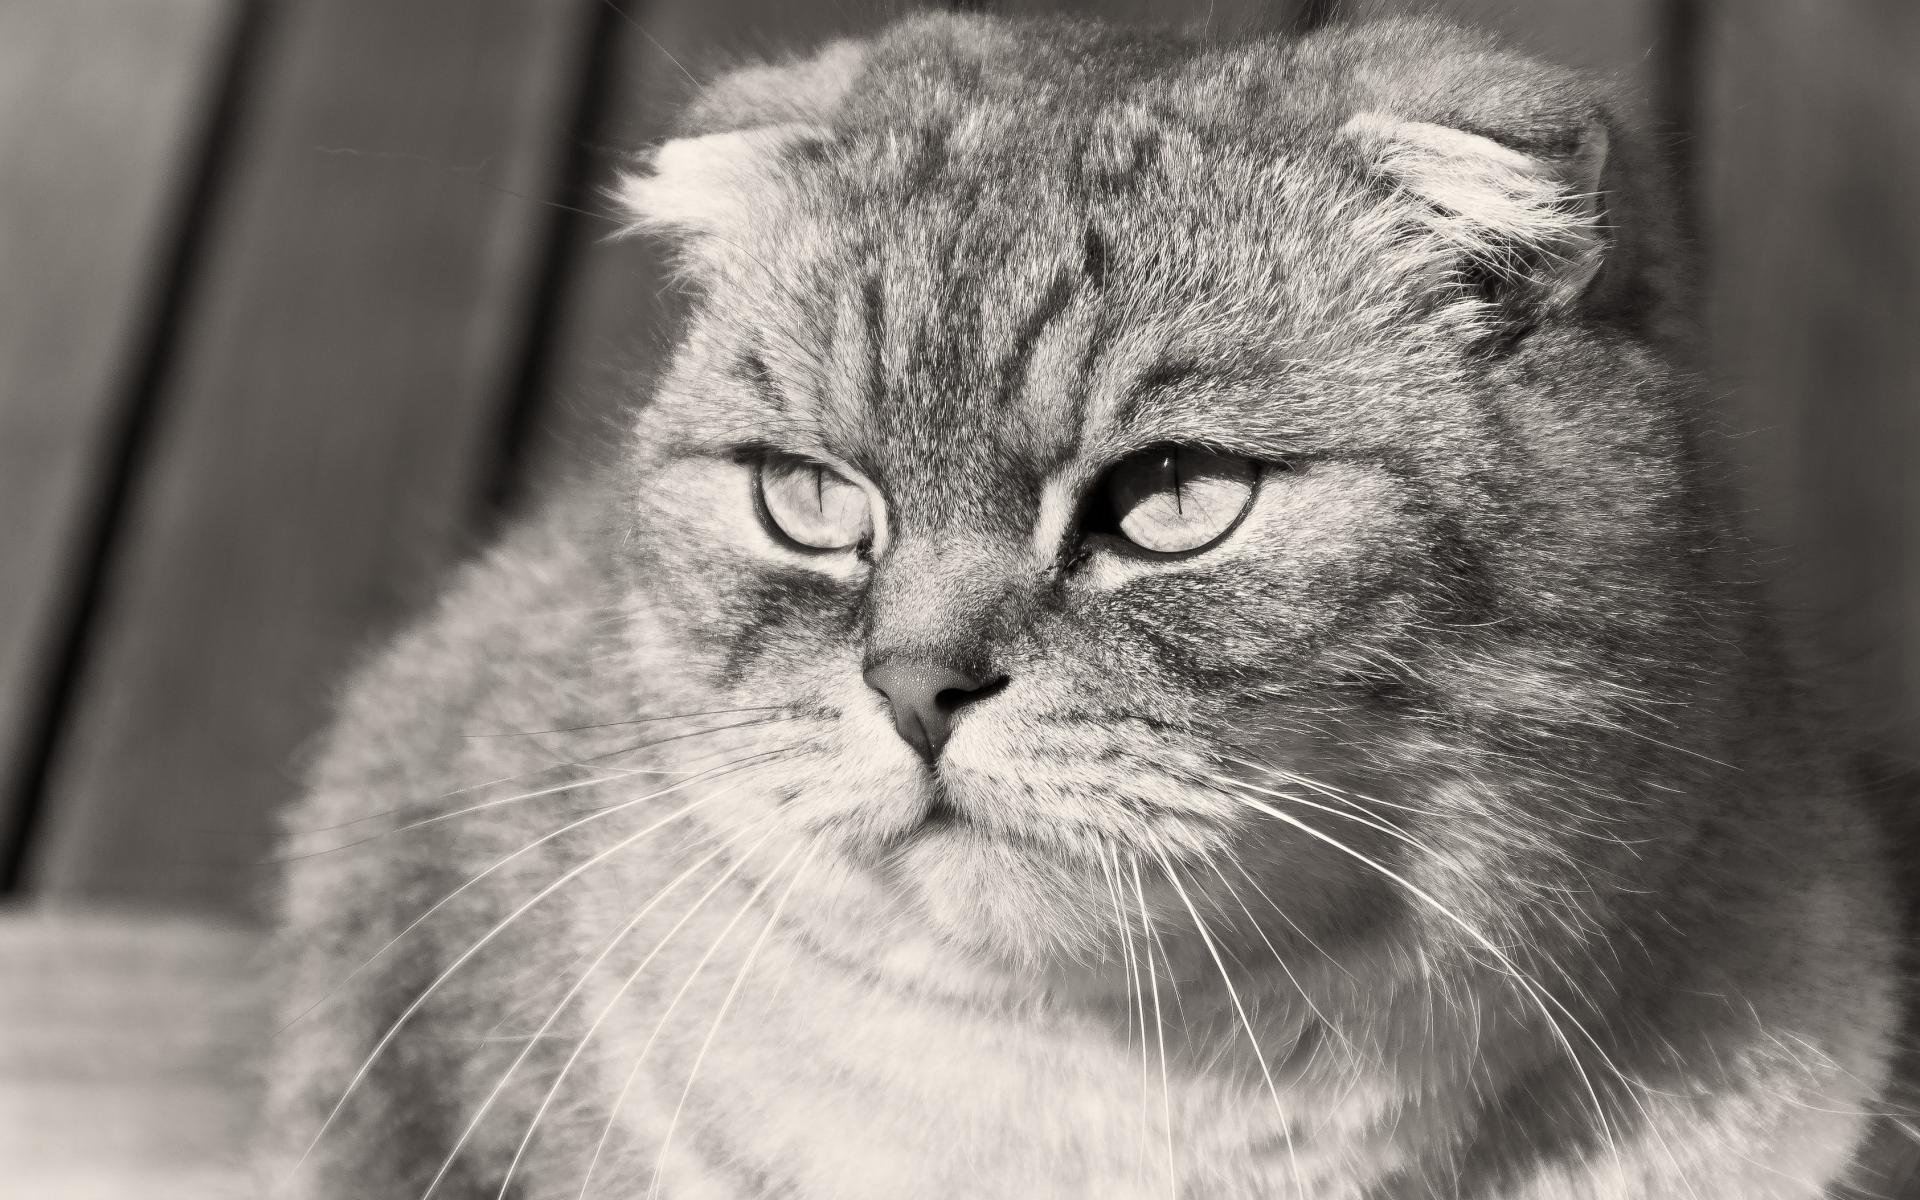 Grumpy Scottish Fold cat, black-and-white photo